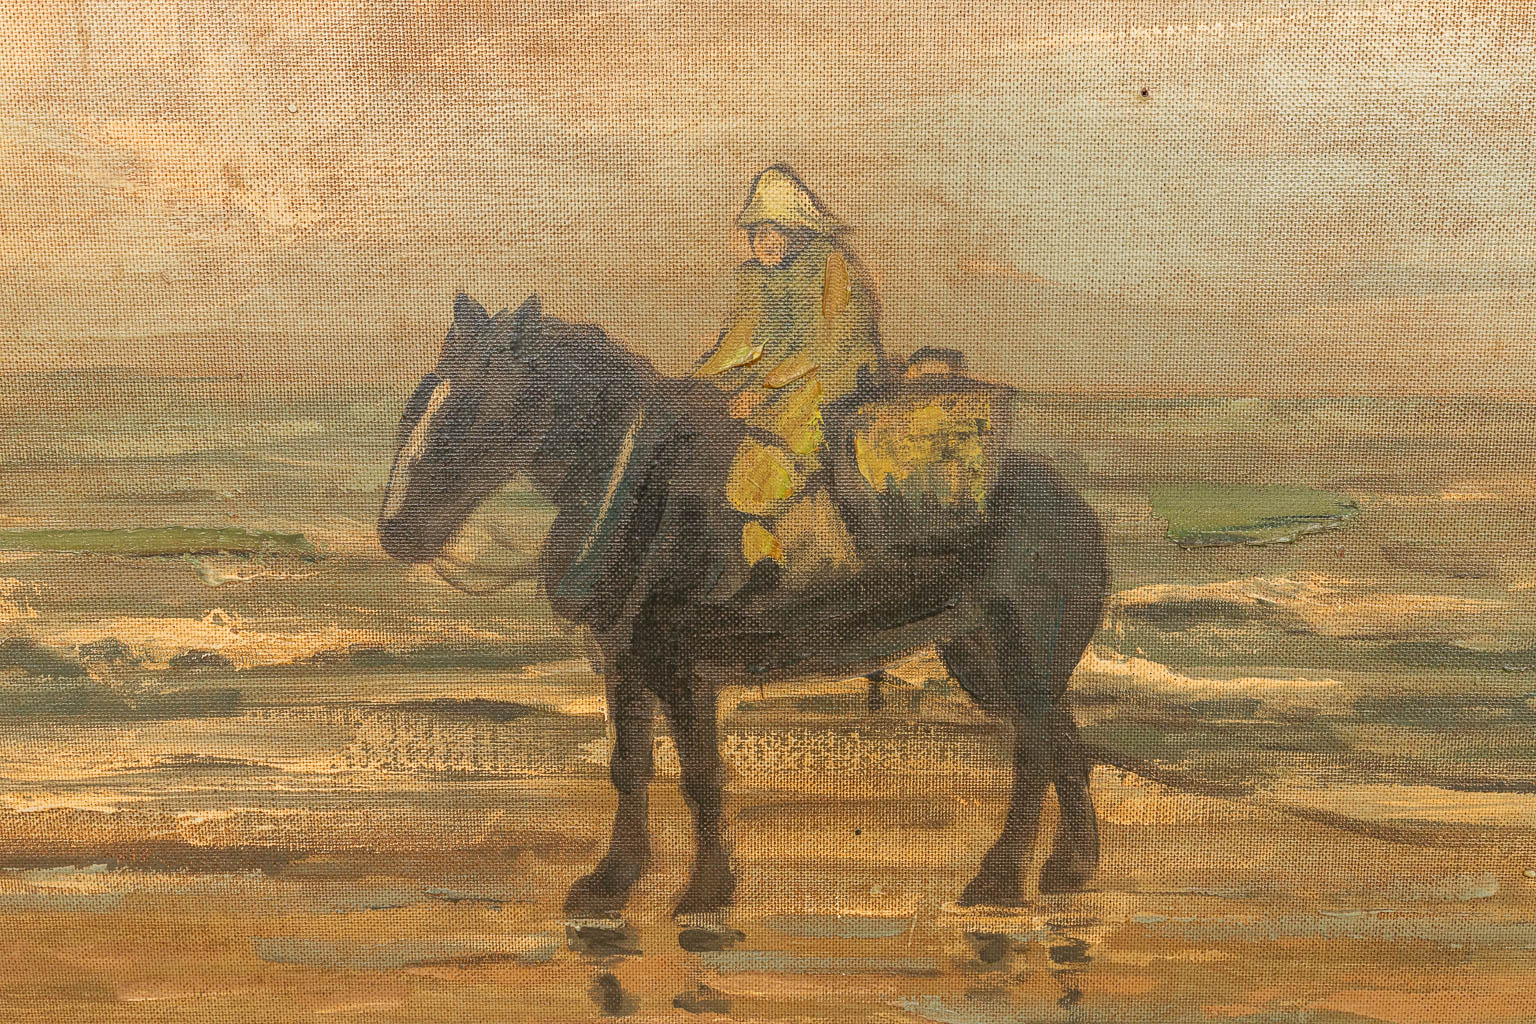 Pierre OCQUET (1926) 'Shrimp Fishers in Oostduinkerke' a large painting, oil on panel. (200 x 120 cm)